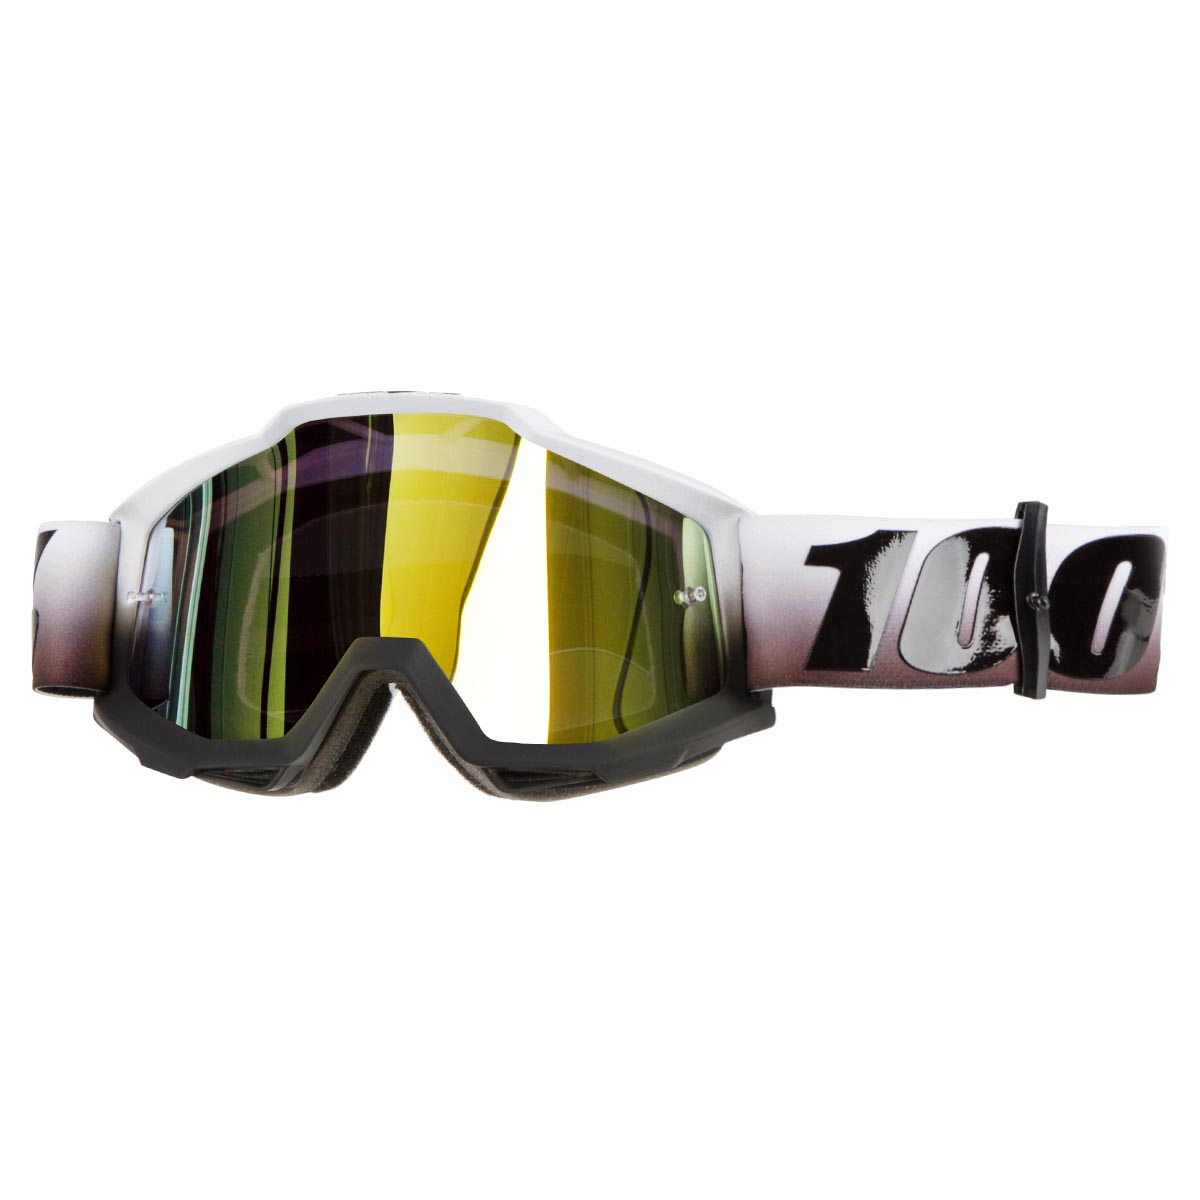 100% Crossbrille The Accuri Invader - Gold verspiegelt Anti-Fog